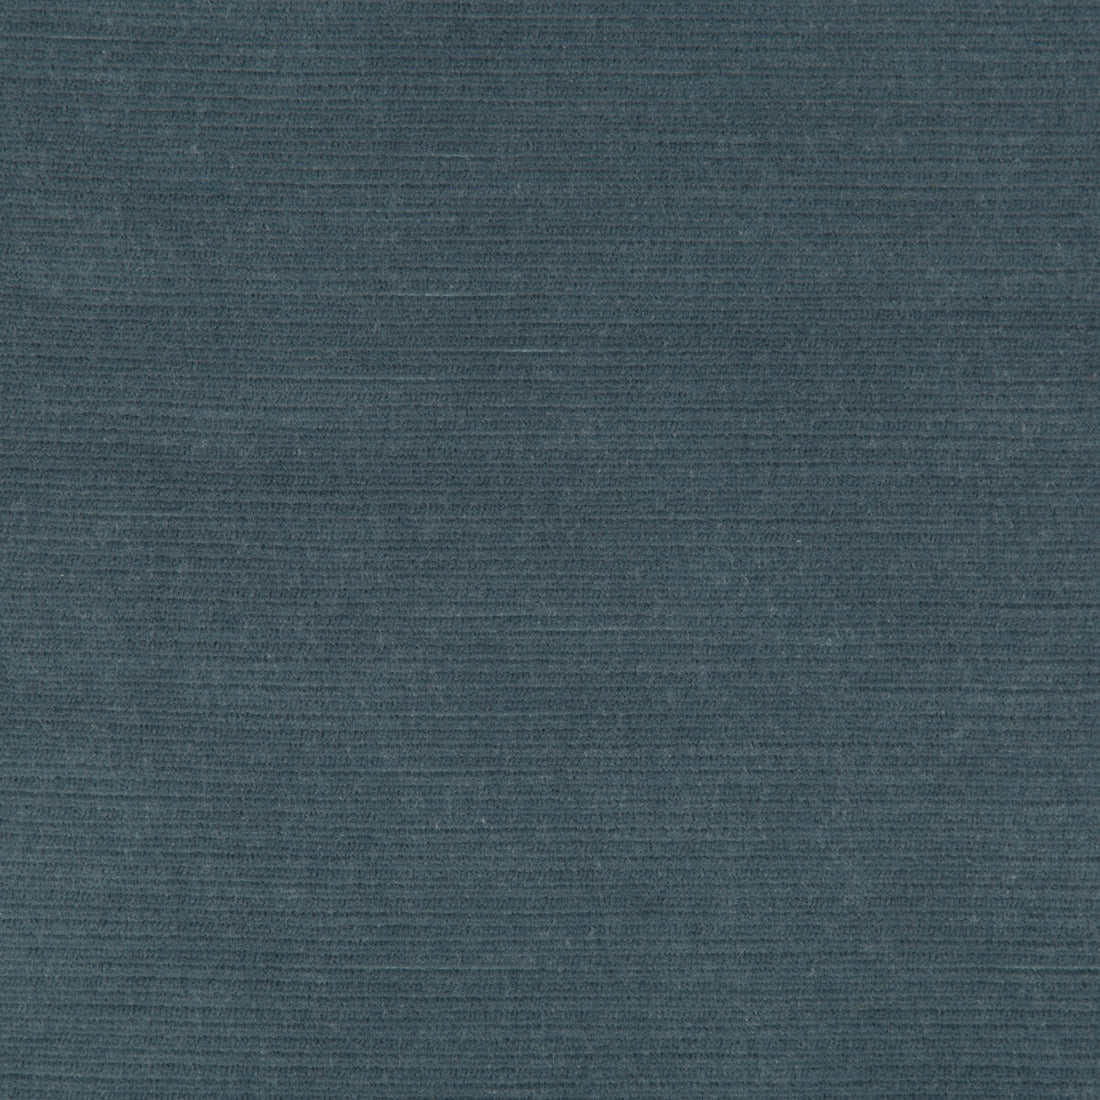 Gemma Velvet fabric in slate color - pattern 2018148.15.0 - by Lee Jofa in the Gemma Performance Velvet collection